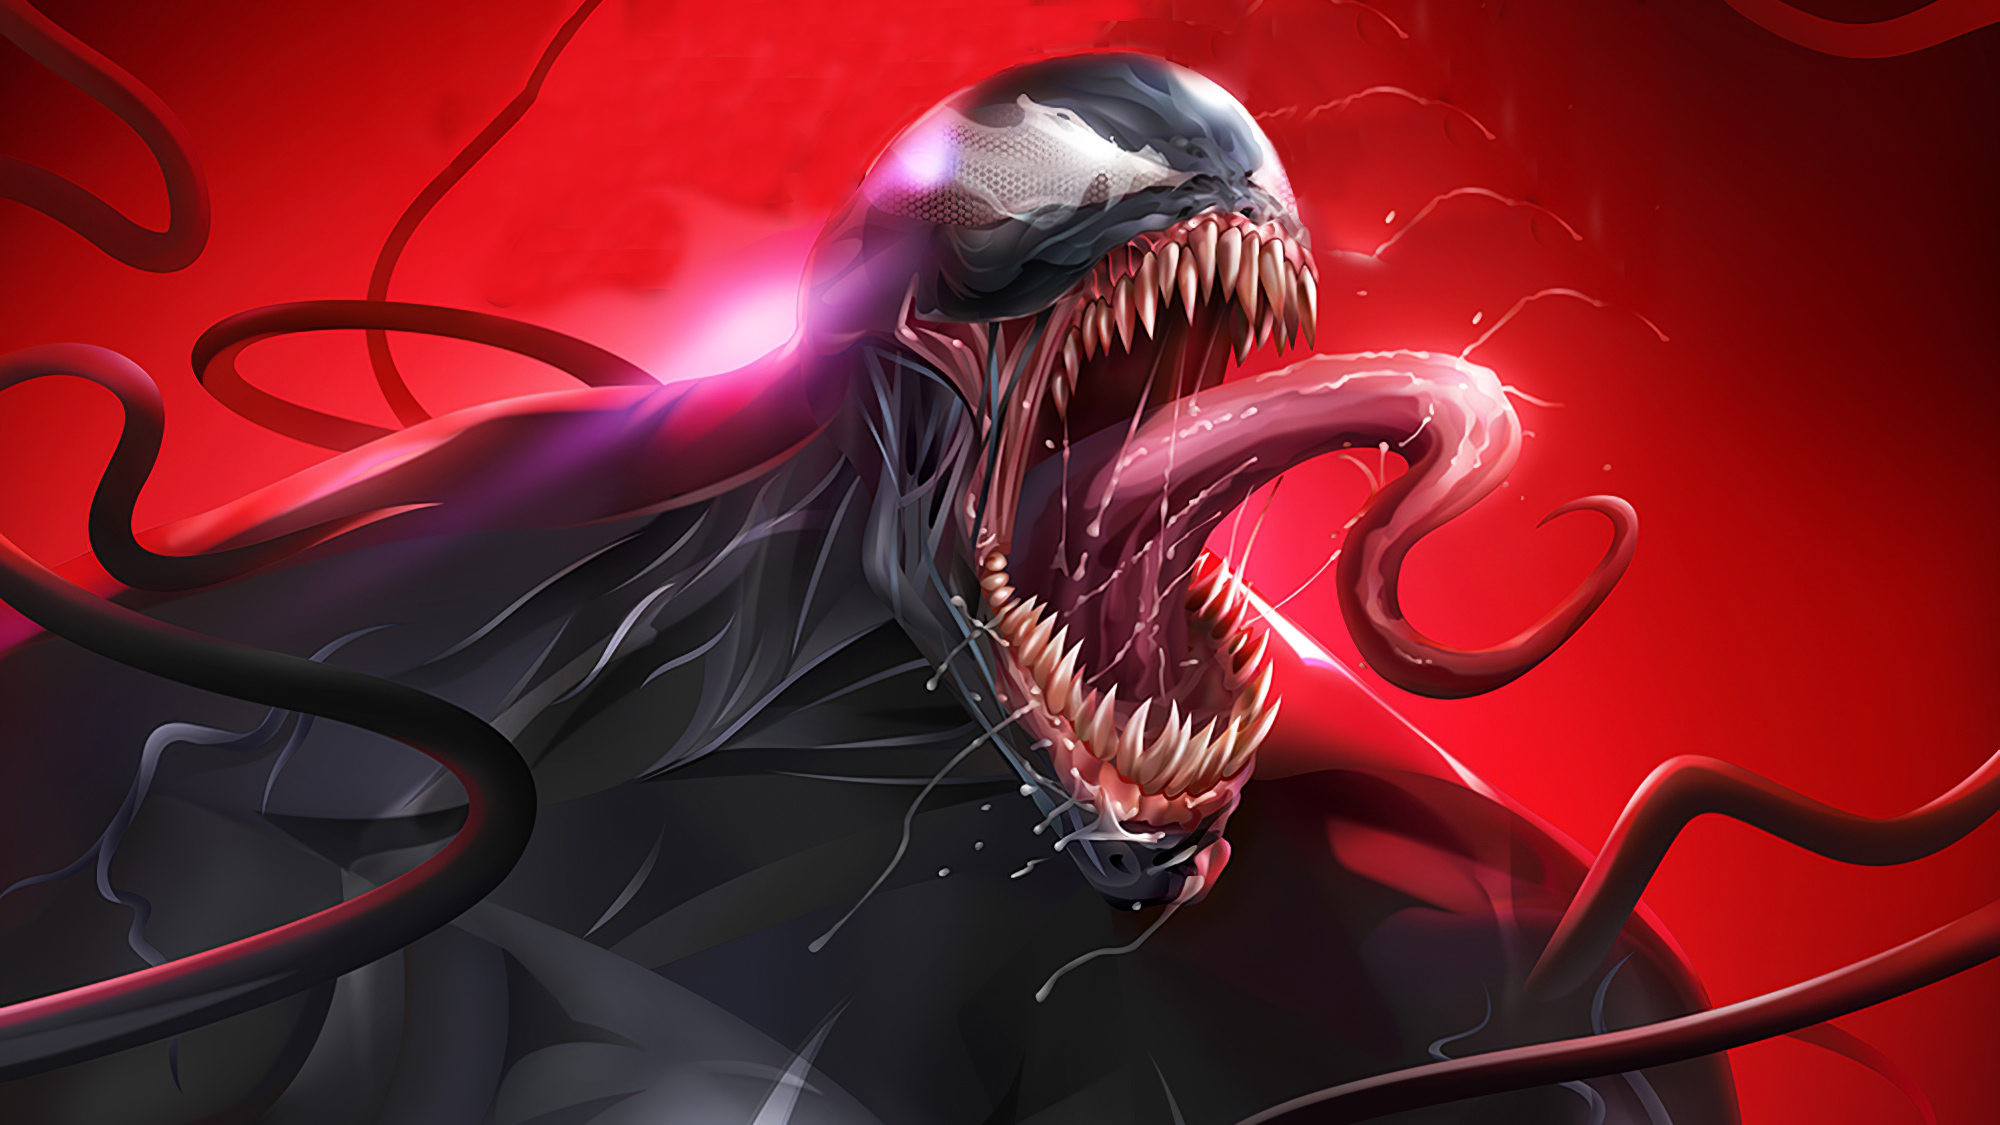 Venom Hd Artwork, HD Superheroes, 4k Wallpapers, Images, Backgrounds